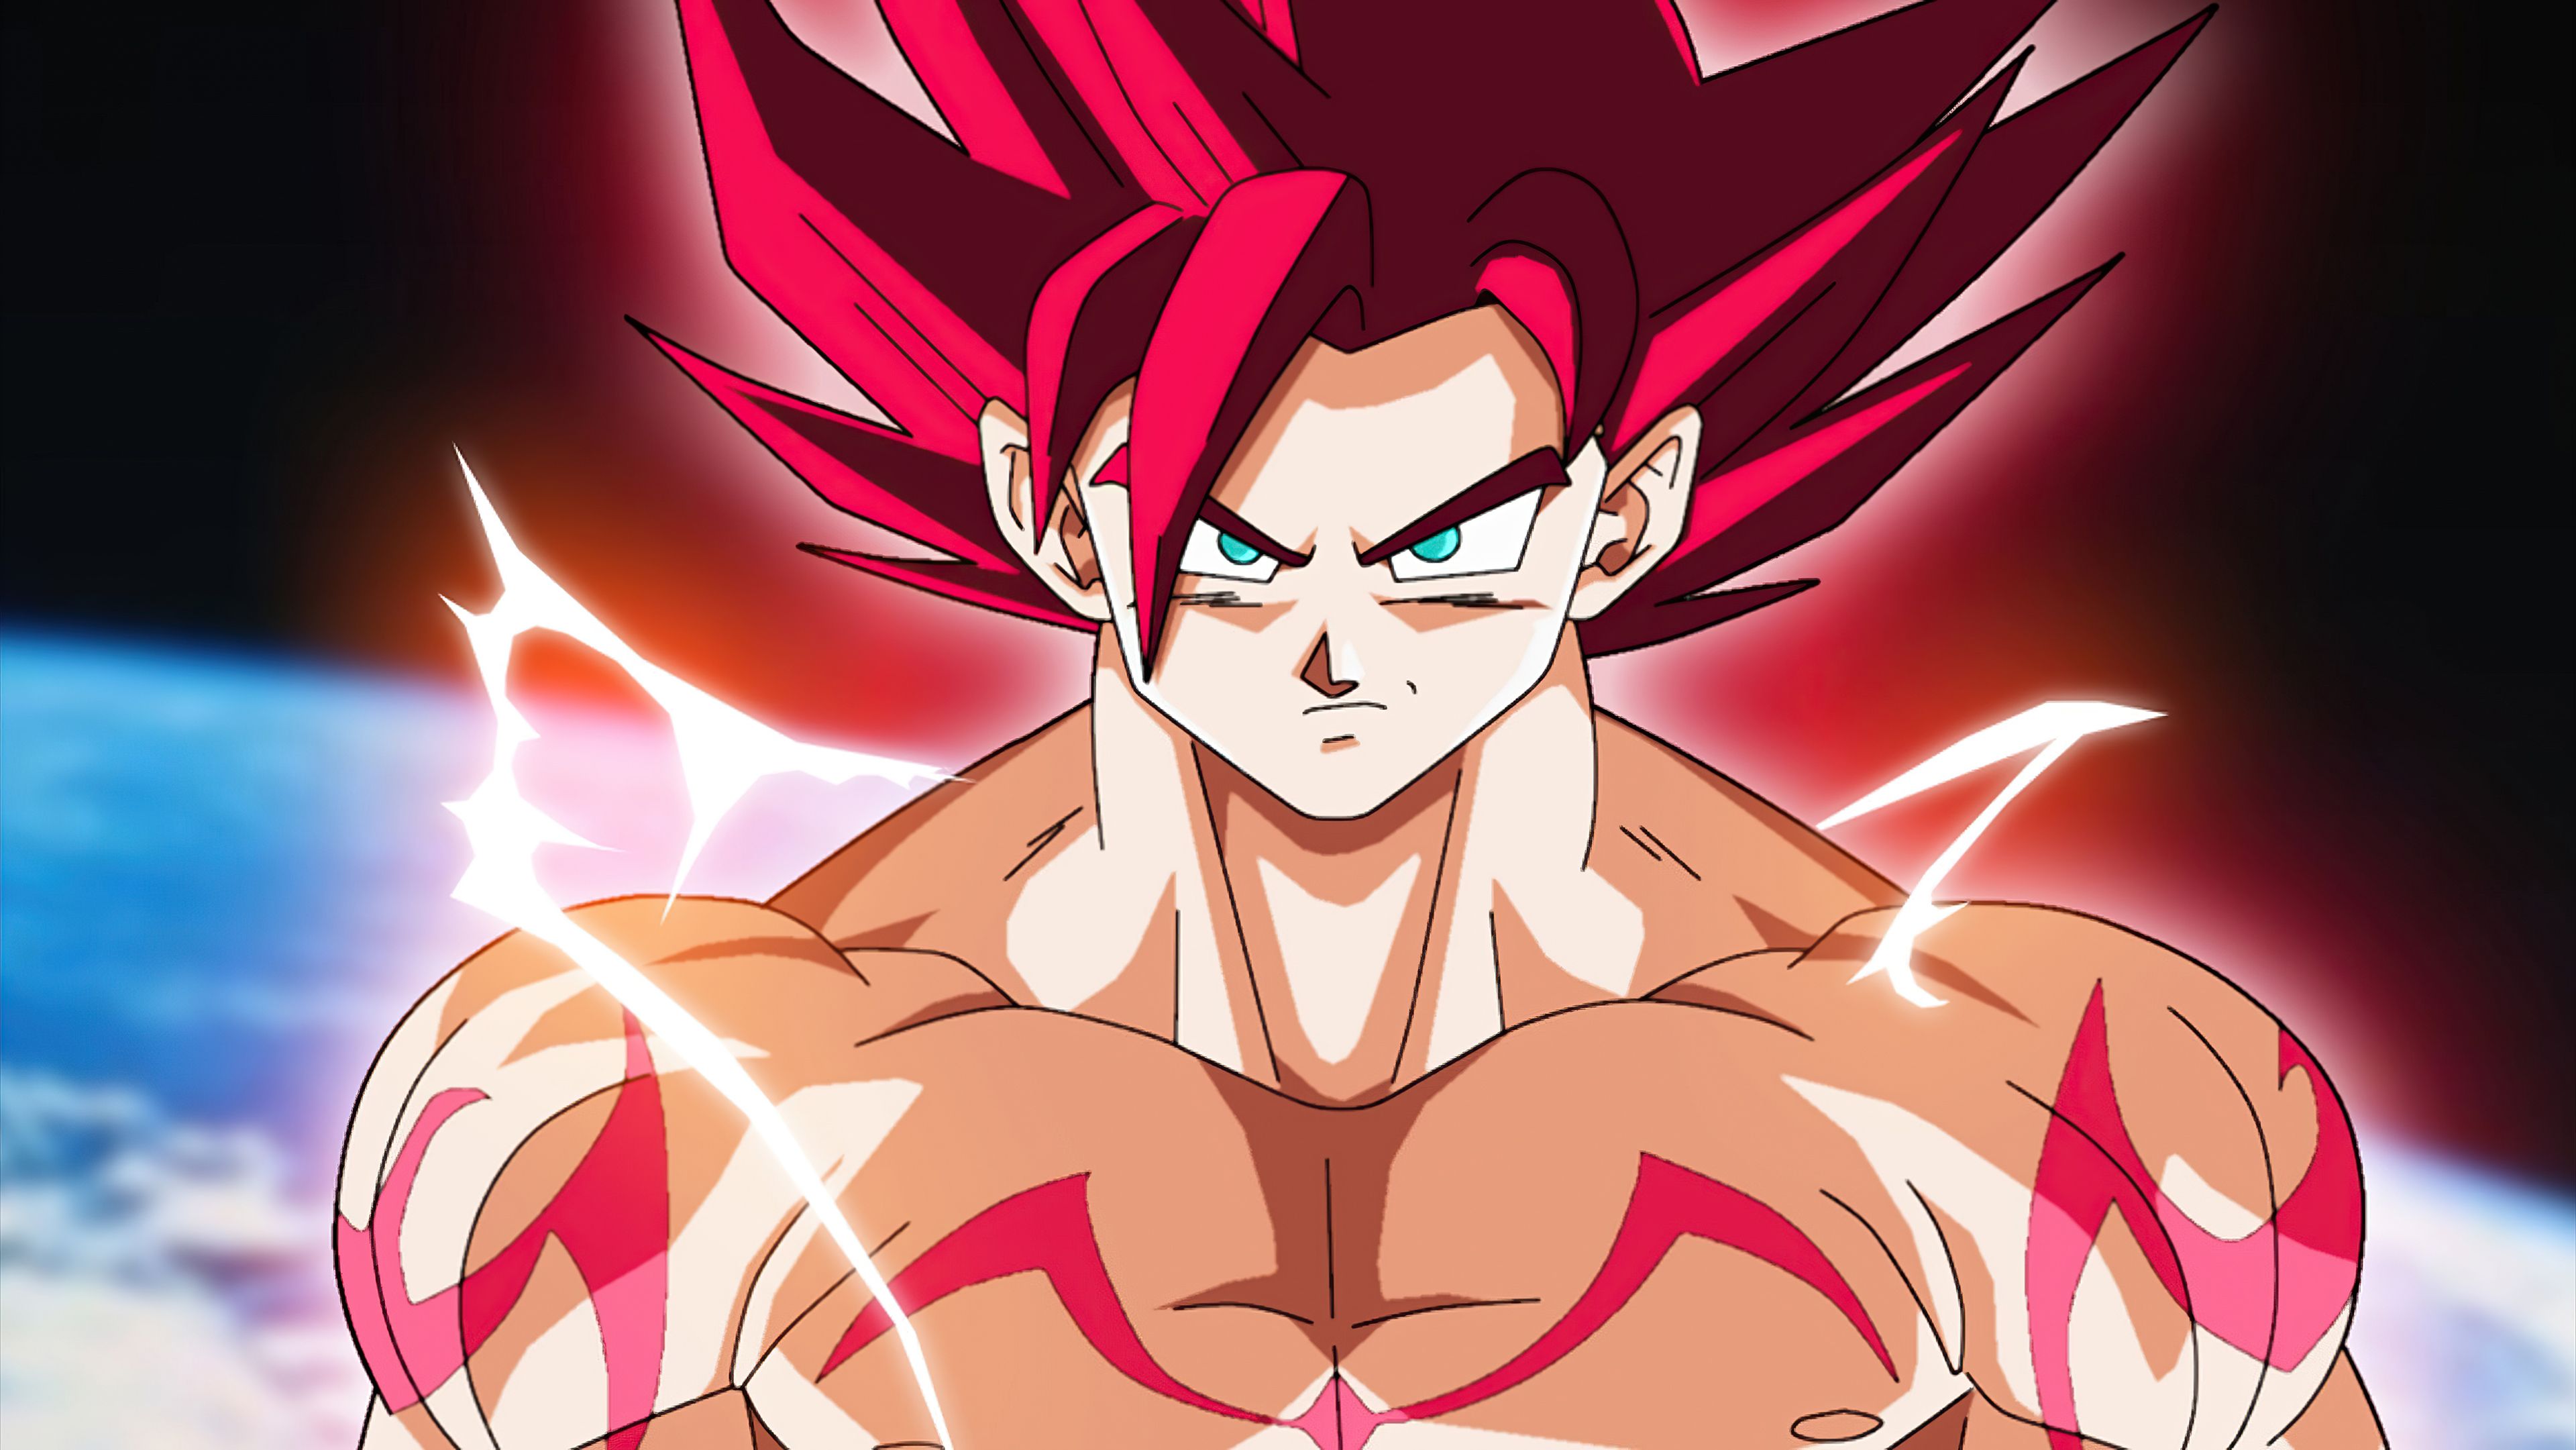 Dragon Ball Super Goku Super Saiyan God 4k, HD Anime, 4k Wallpaper, Image, Background, Photo and Picture